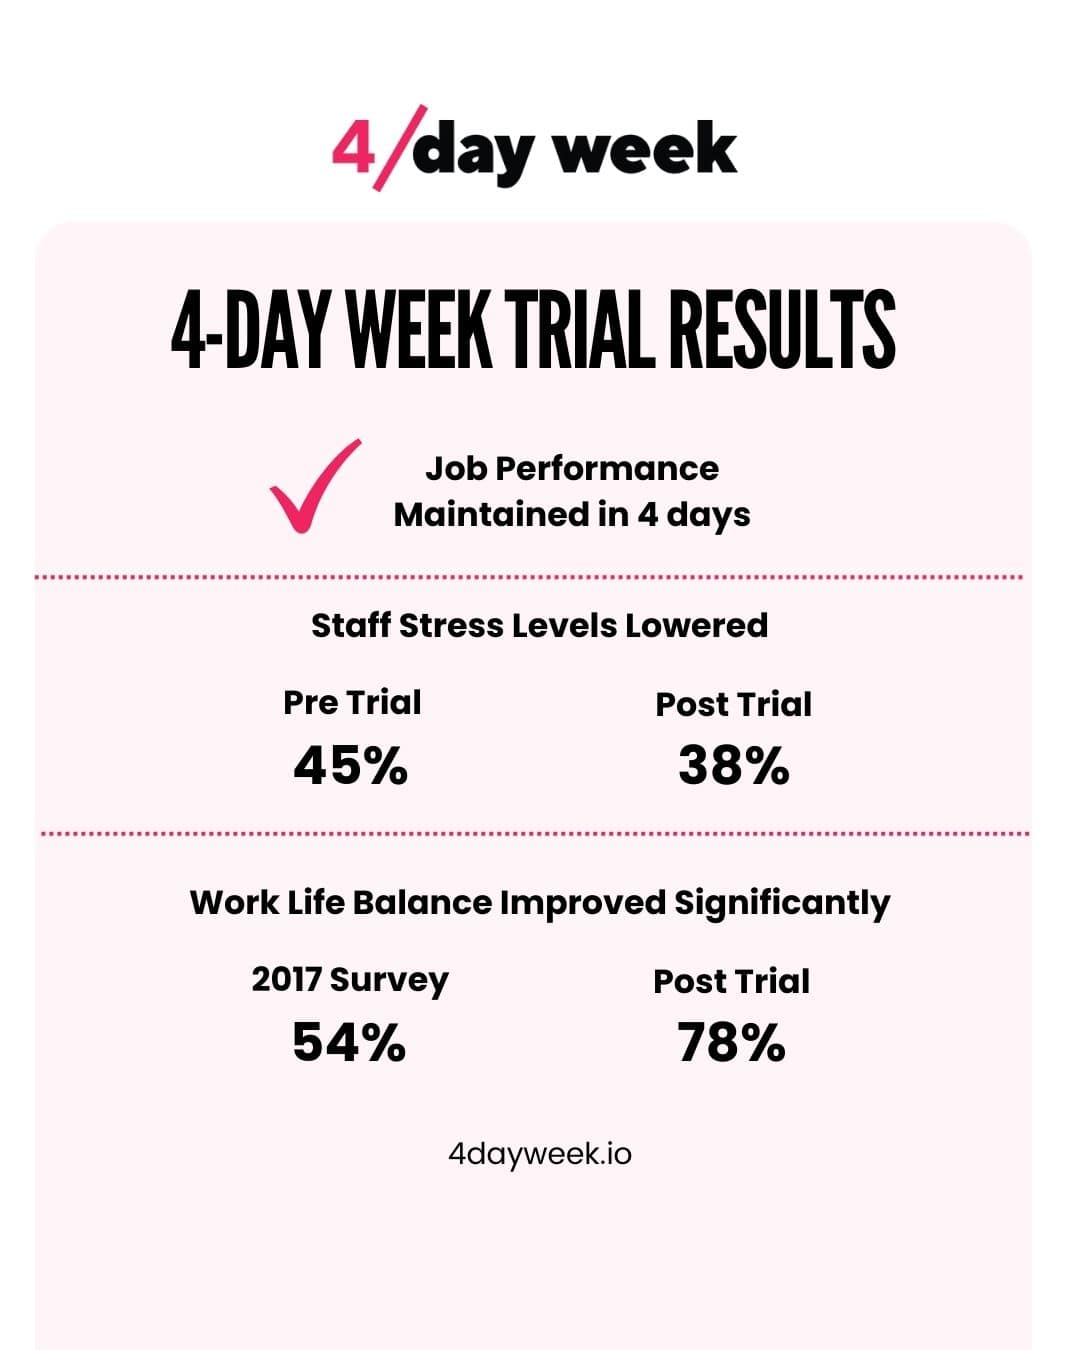 4-Day Workweek - A Positive Impact on Job Performance